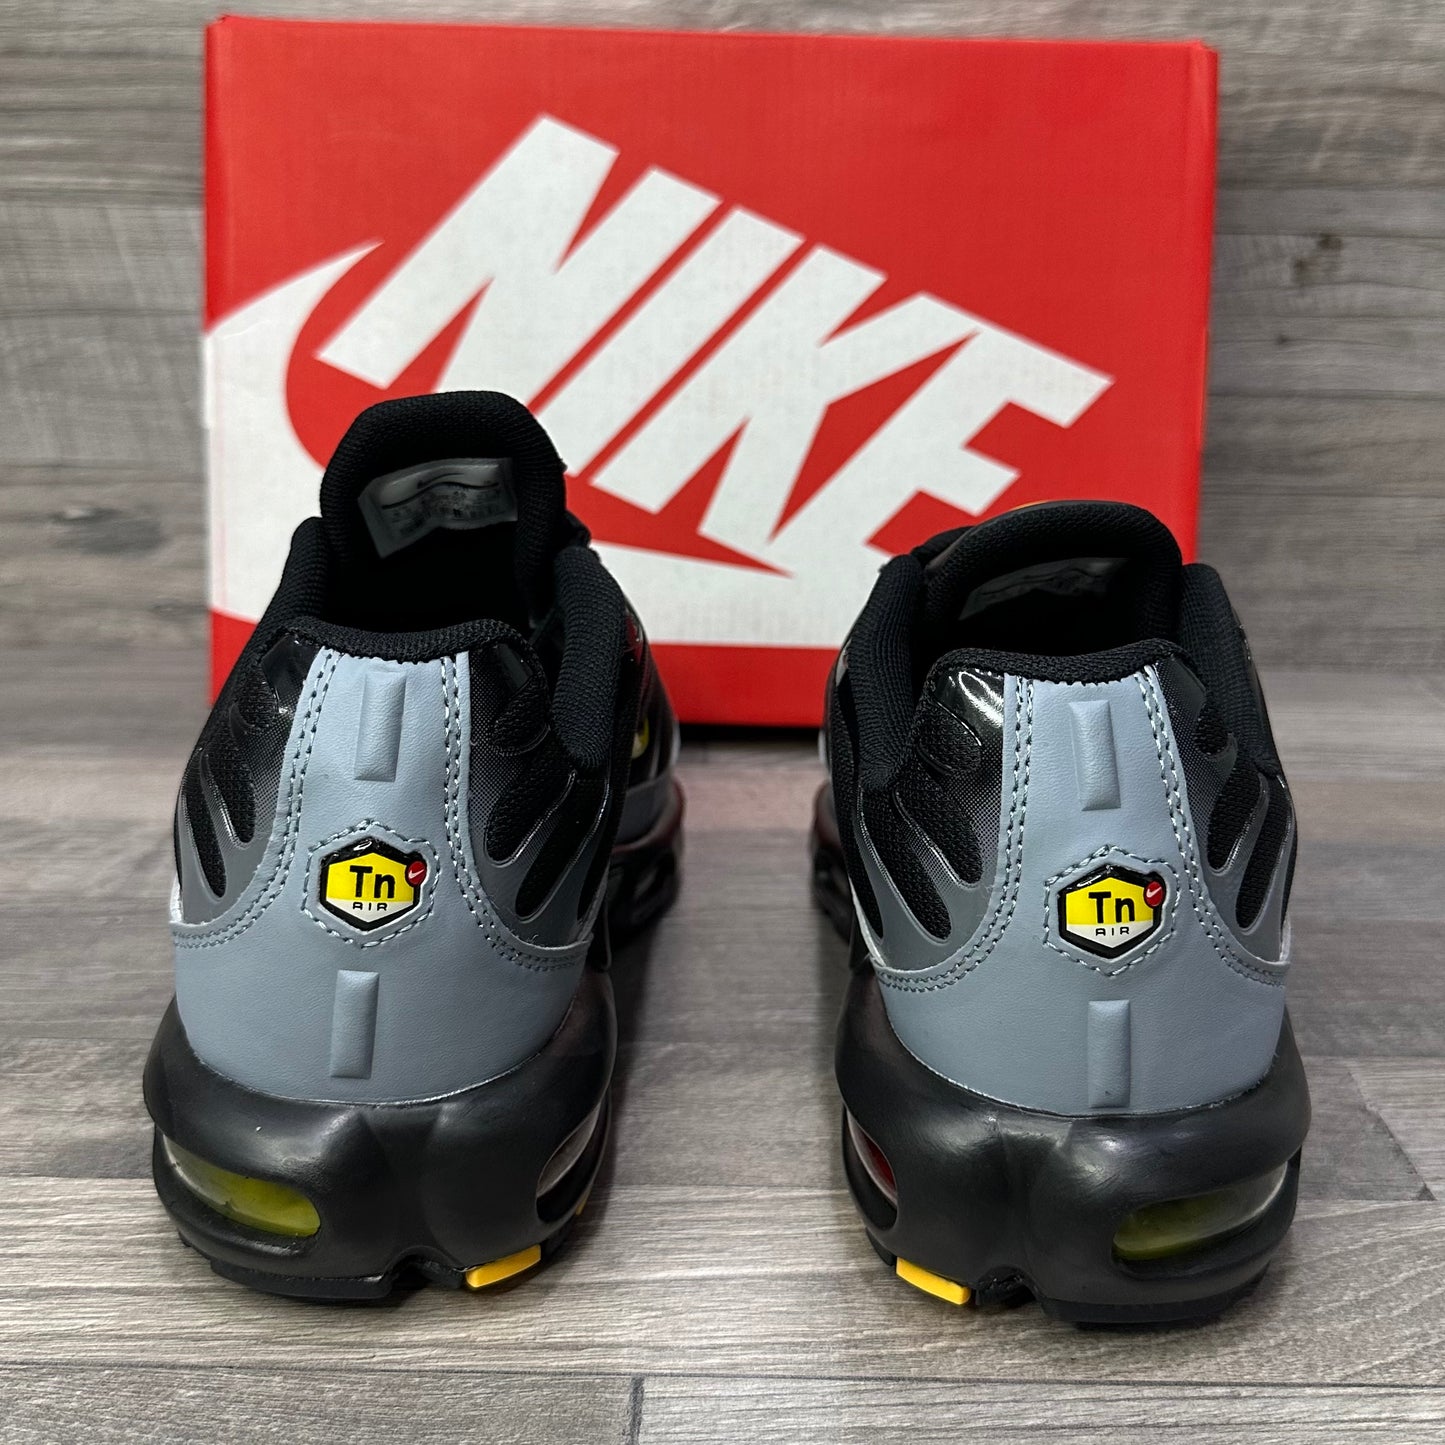 Nike Air Max Plus TN – ‘’ Black - Grey - Yellow ’’